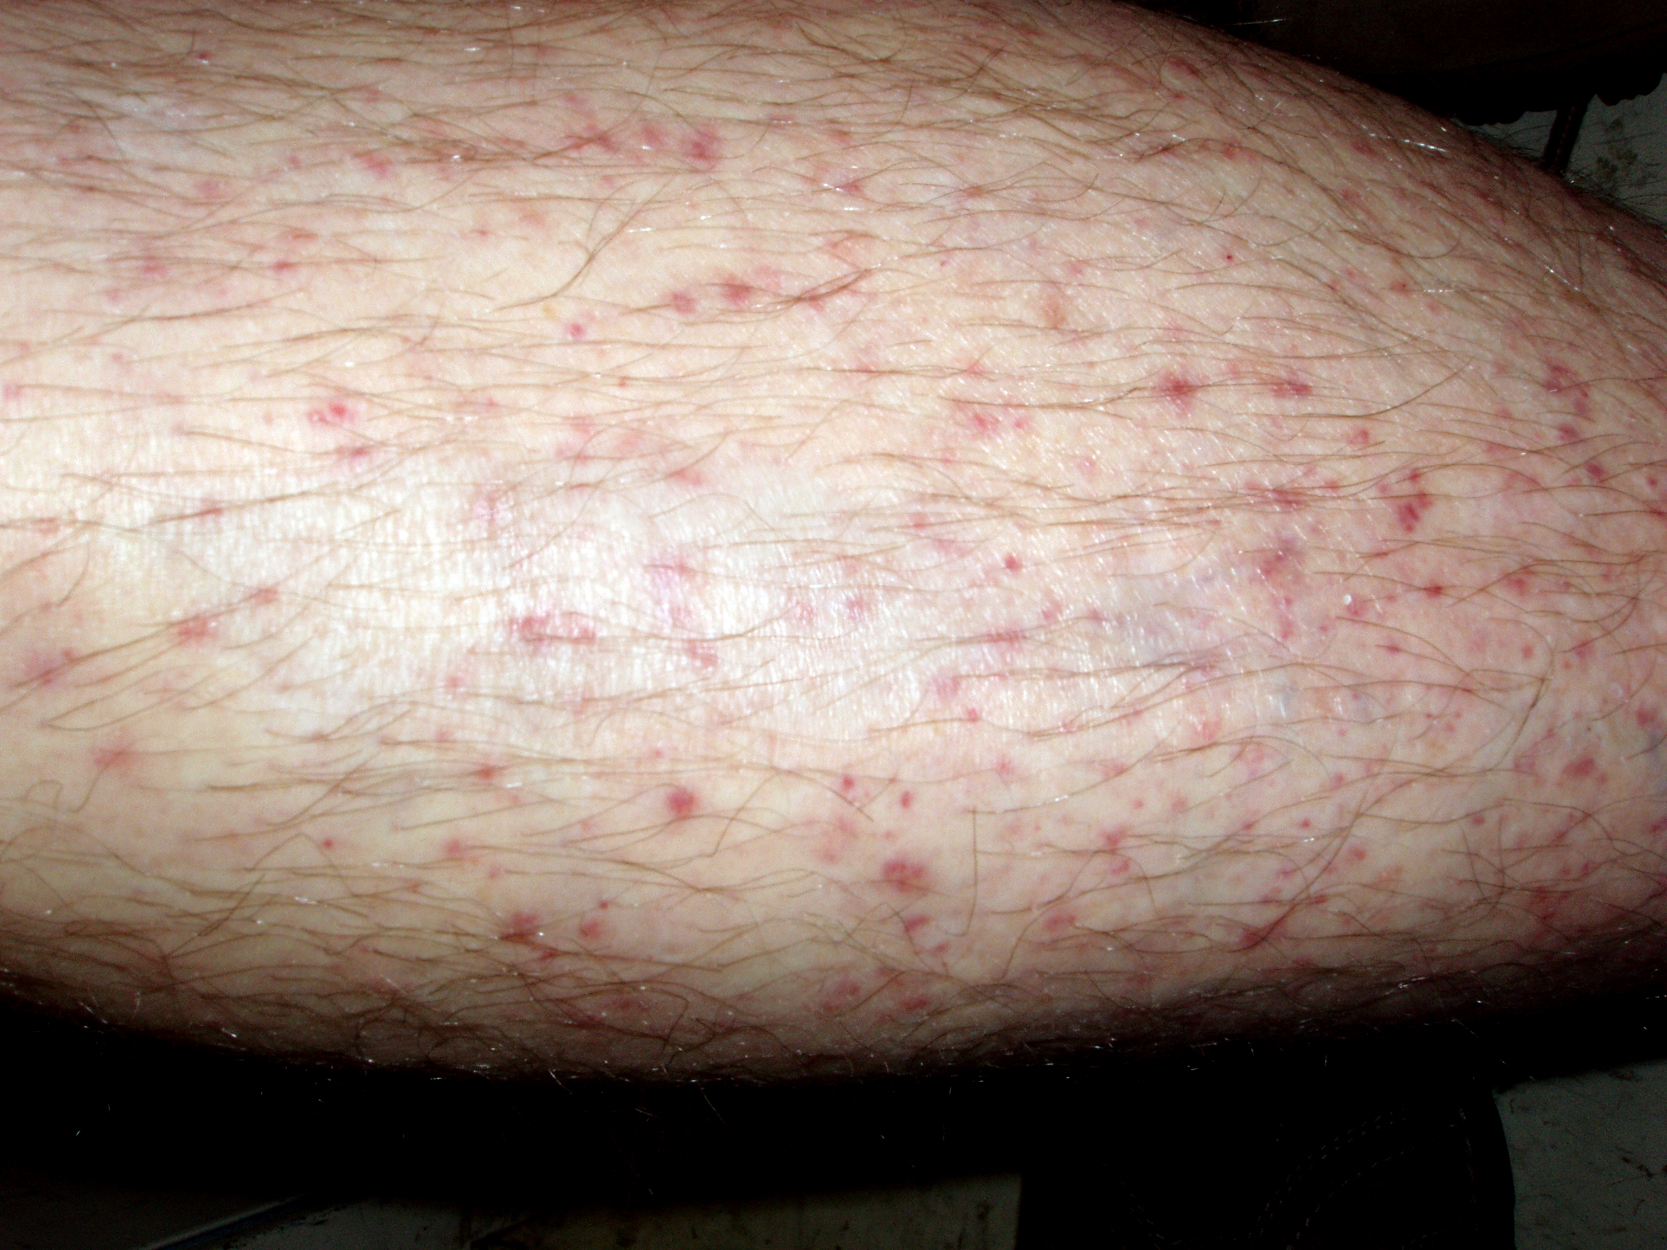 The Red Leg - Dermatology